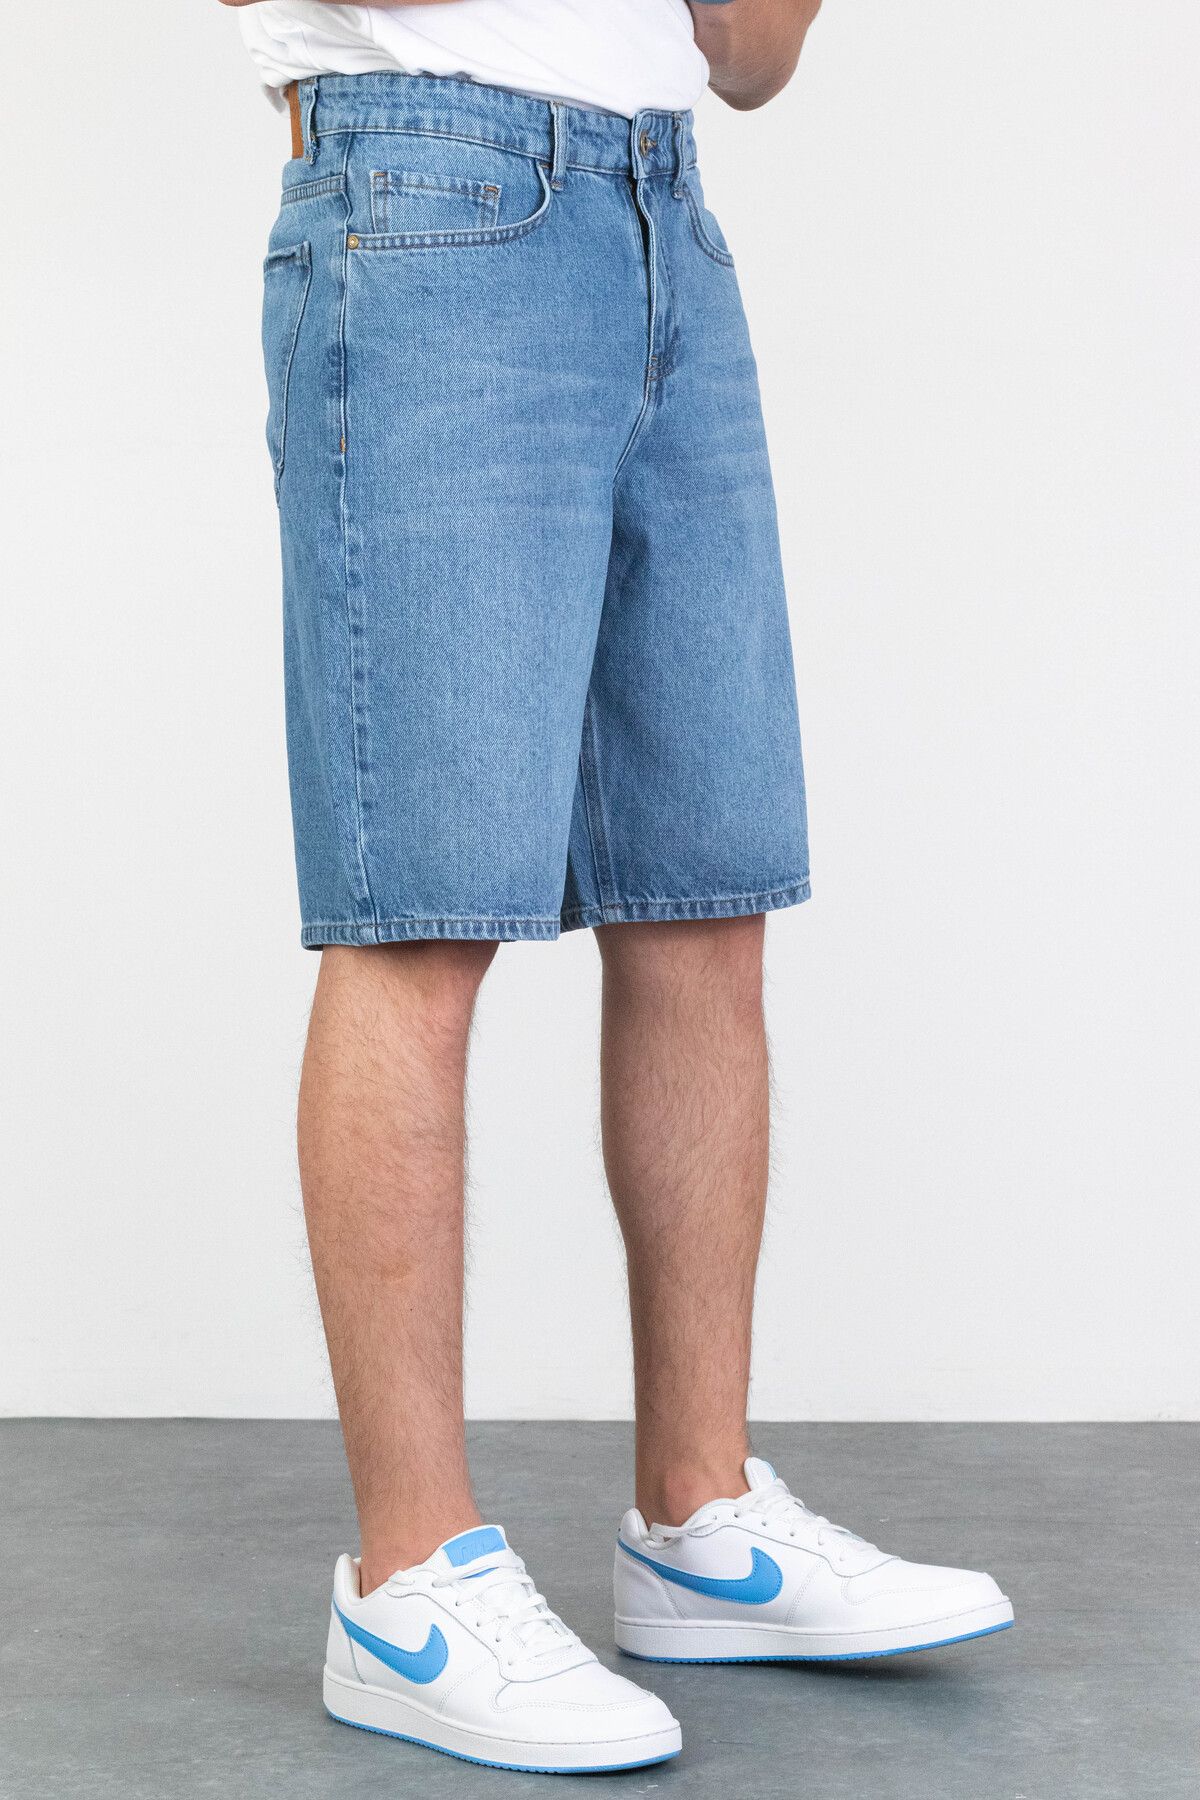 HLT JEANS Erkek Açık Mavi Baggy Fit Rahat Kesim %100 Pamuk Denim Loose Jeans Kot Şort ARTHUR-AÇMAVİ